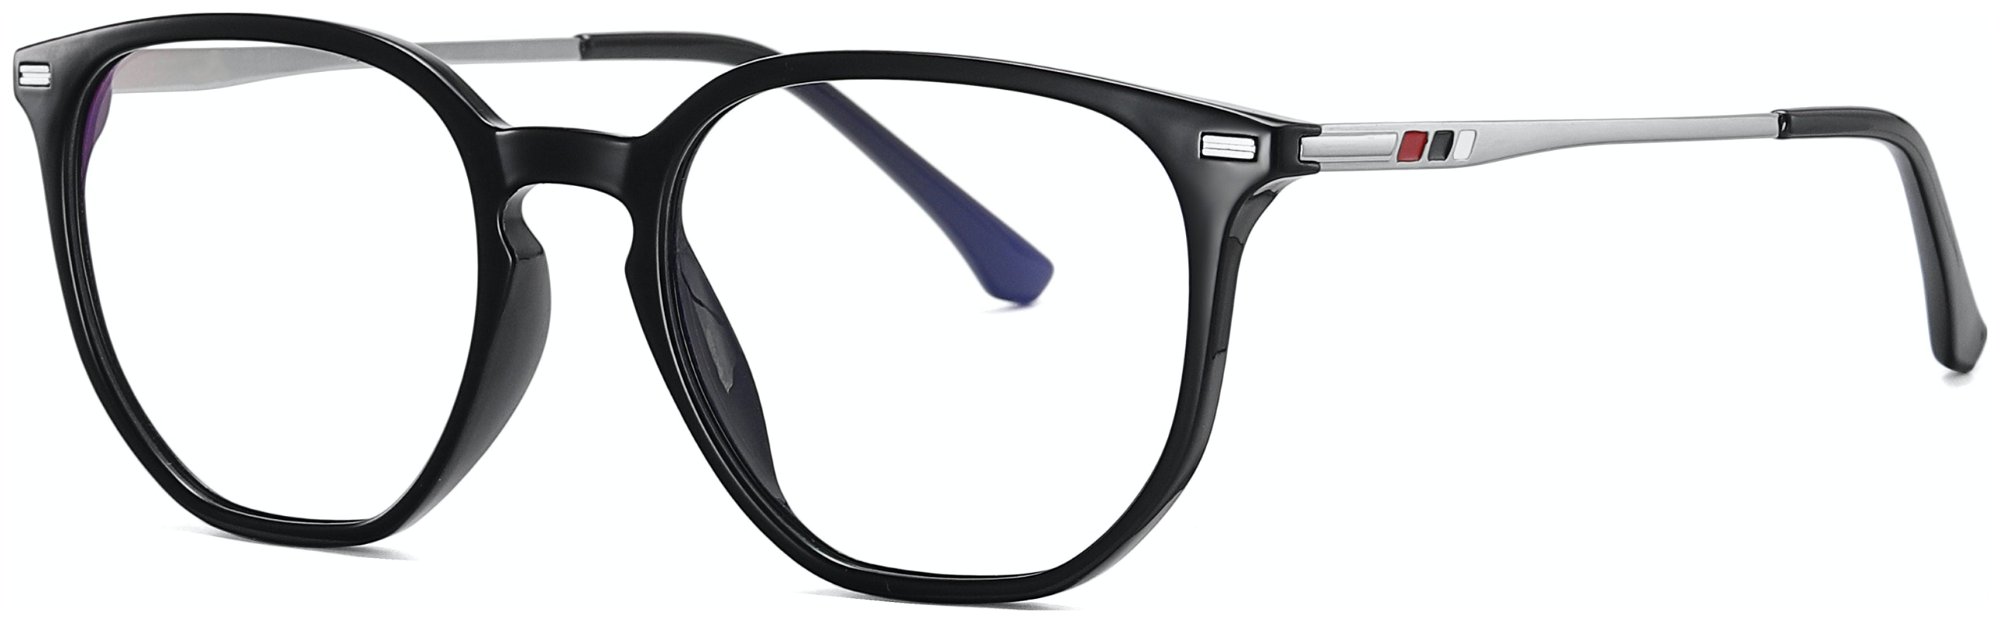 Regulær bluelight briller, Intro by Kaleu (H: 5,4 cm. x B: 2 cm. x L: 14,5 cm., Sort)